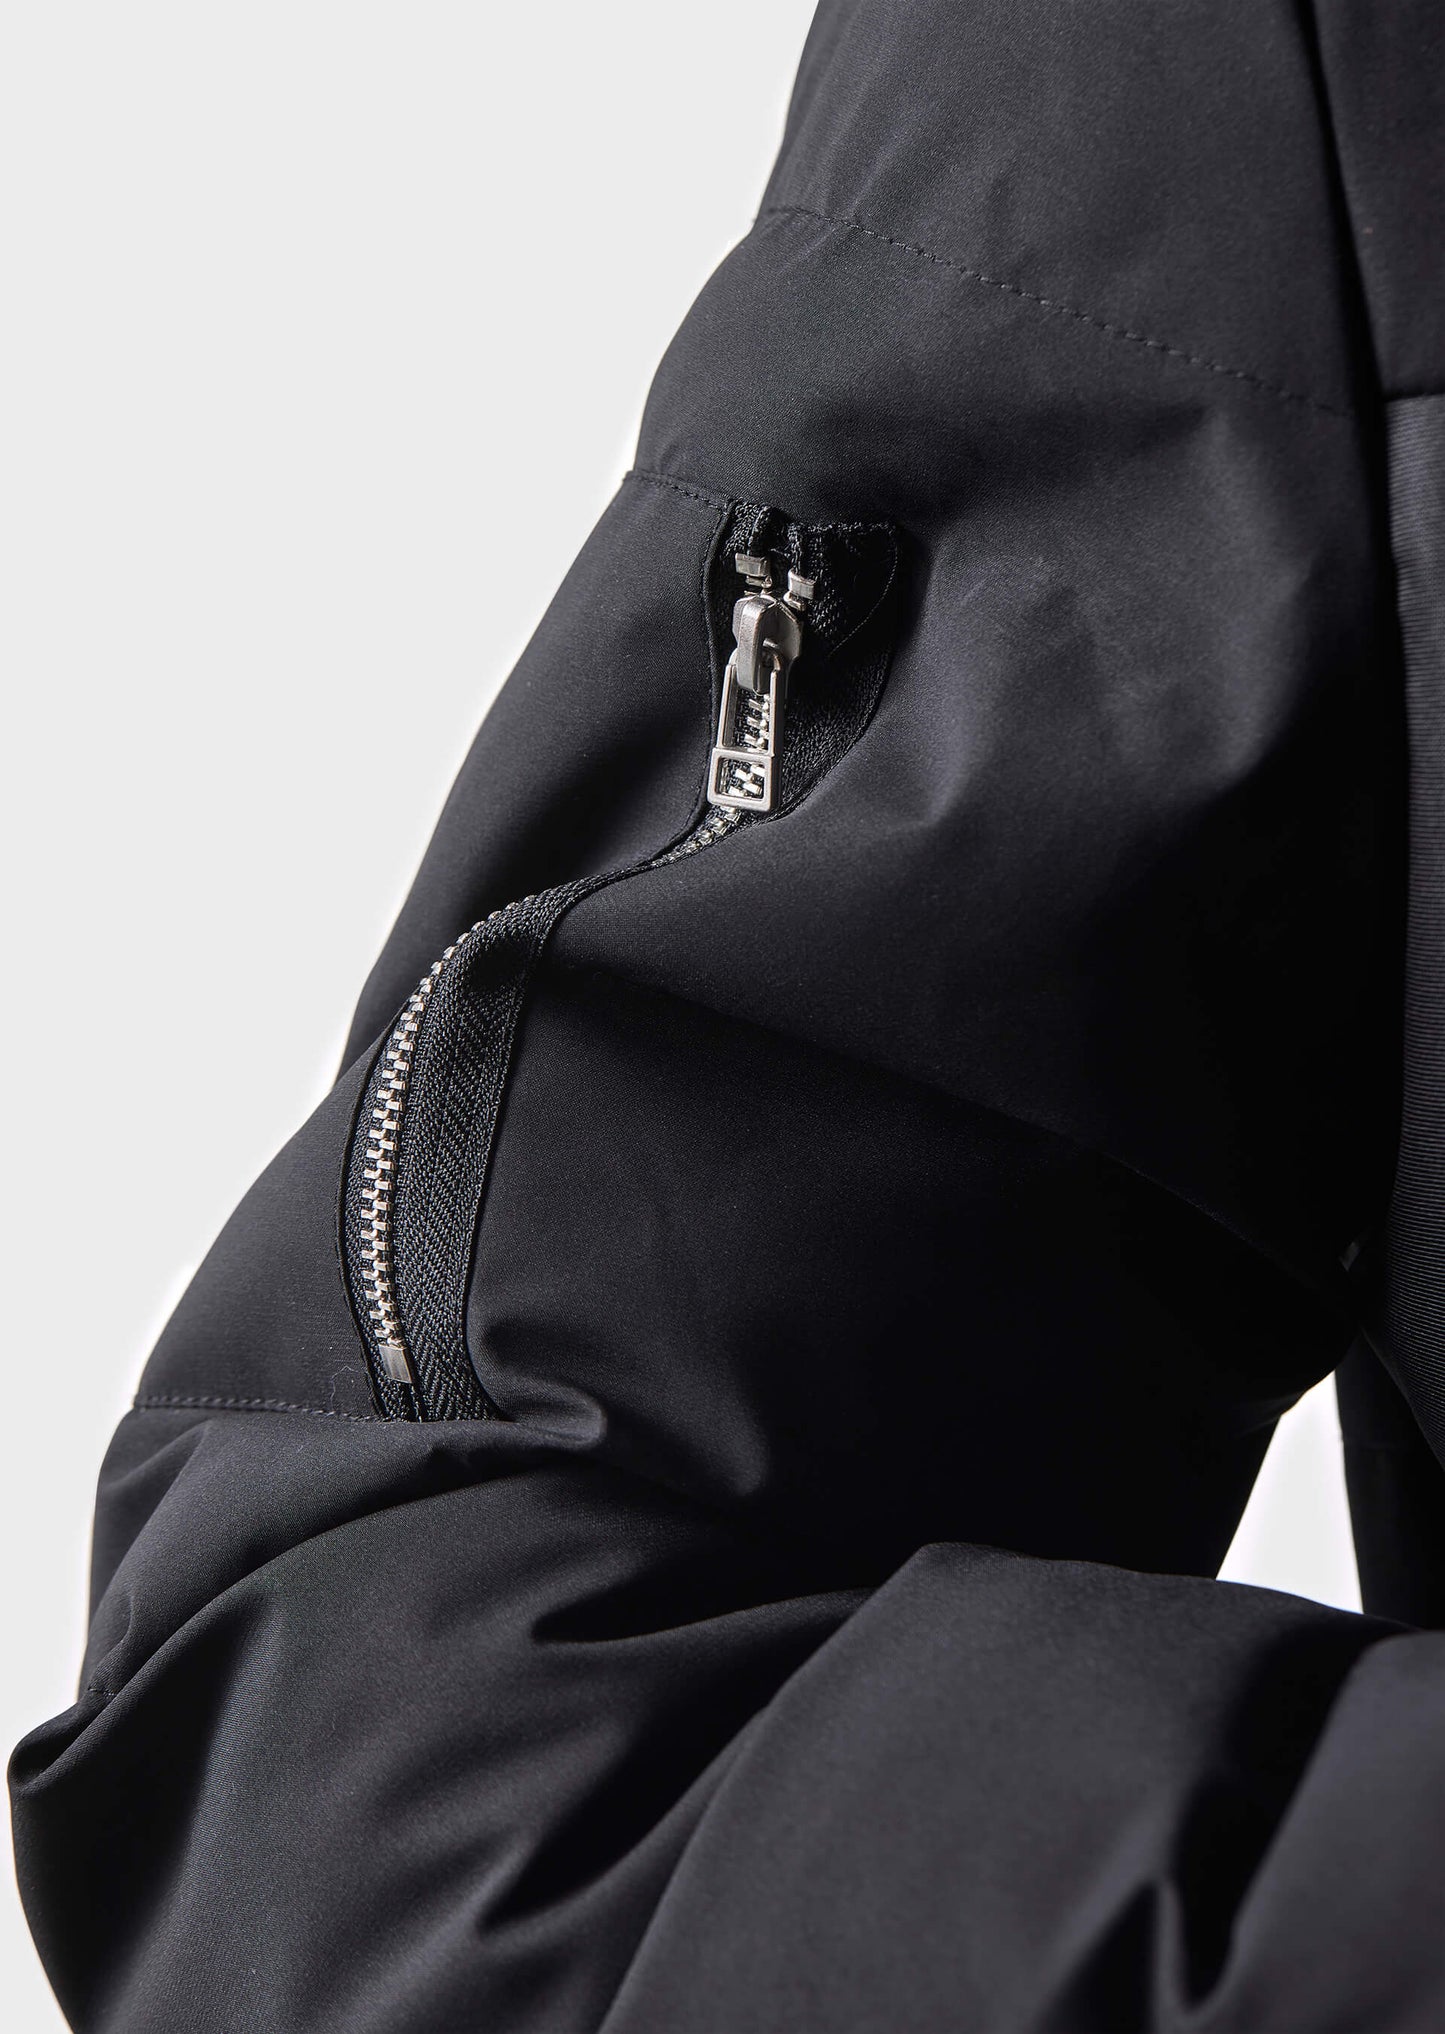 Hybrid Black Jacket